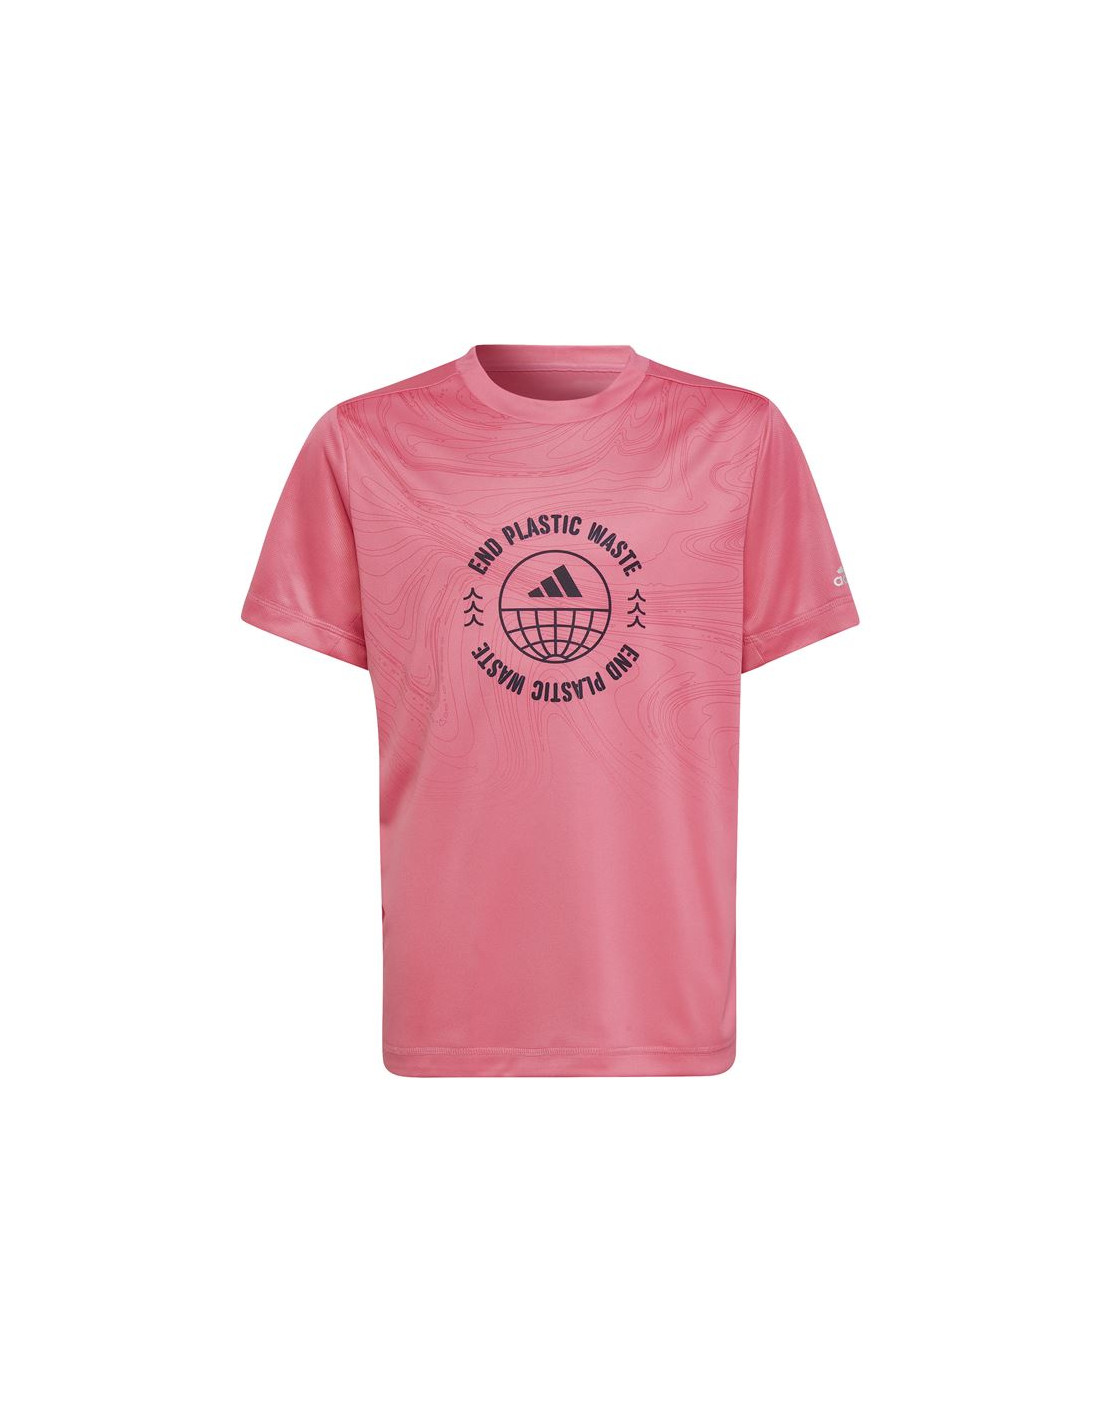 Camiseta de running adidas unitefit infantil pink